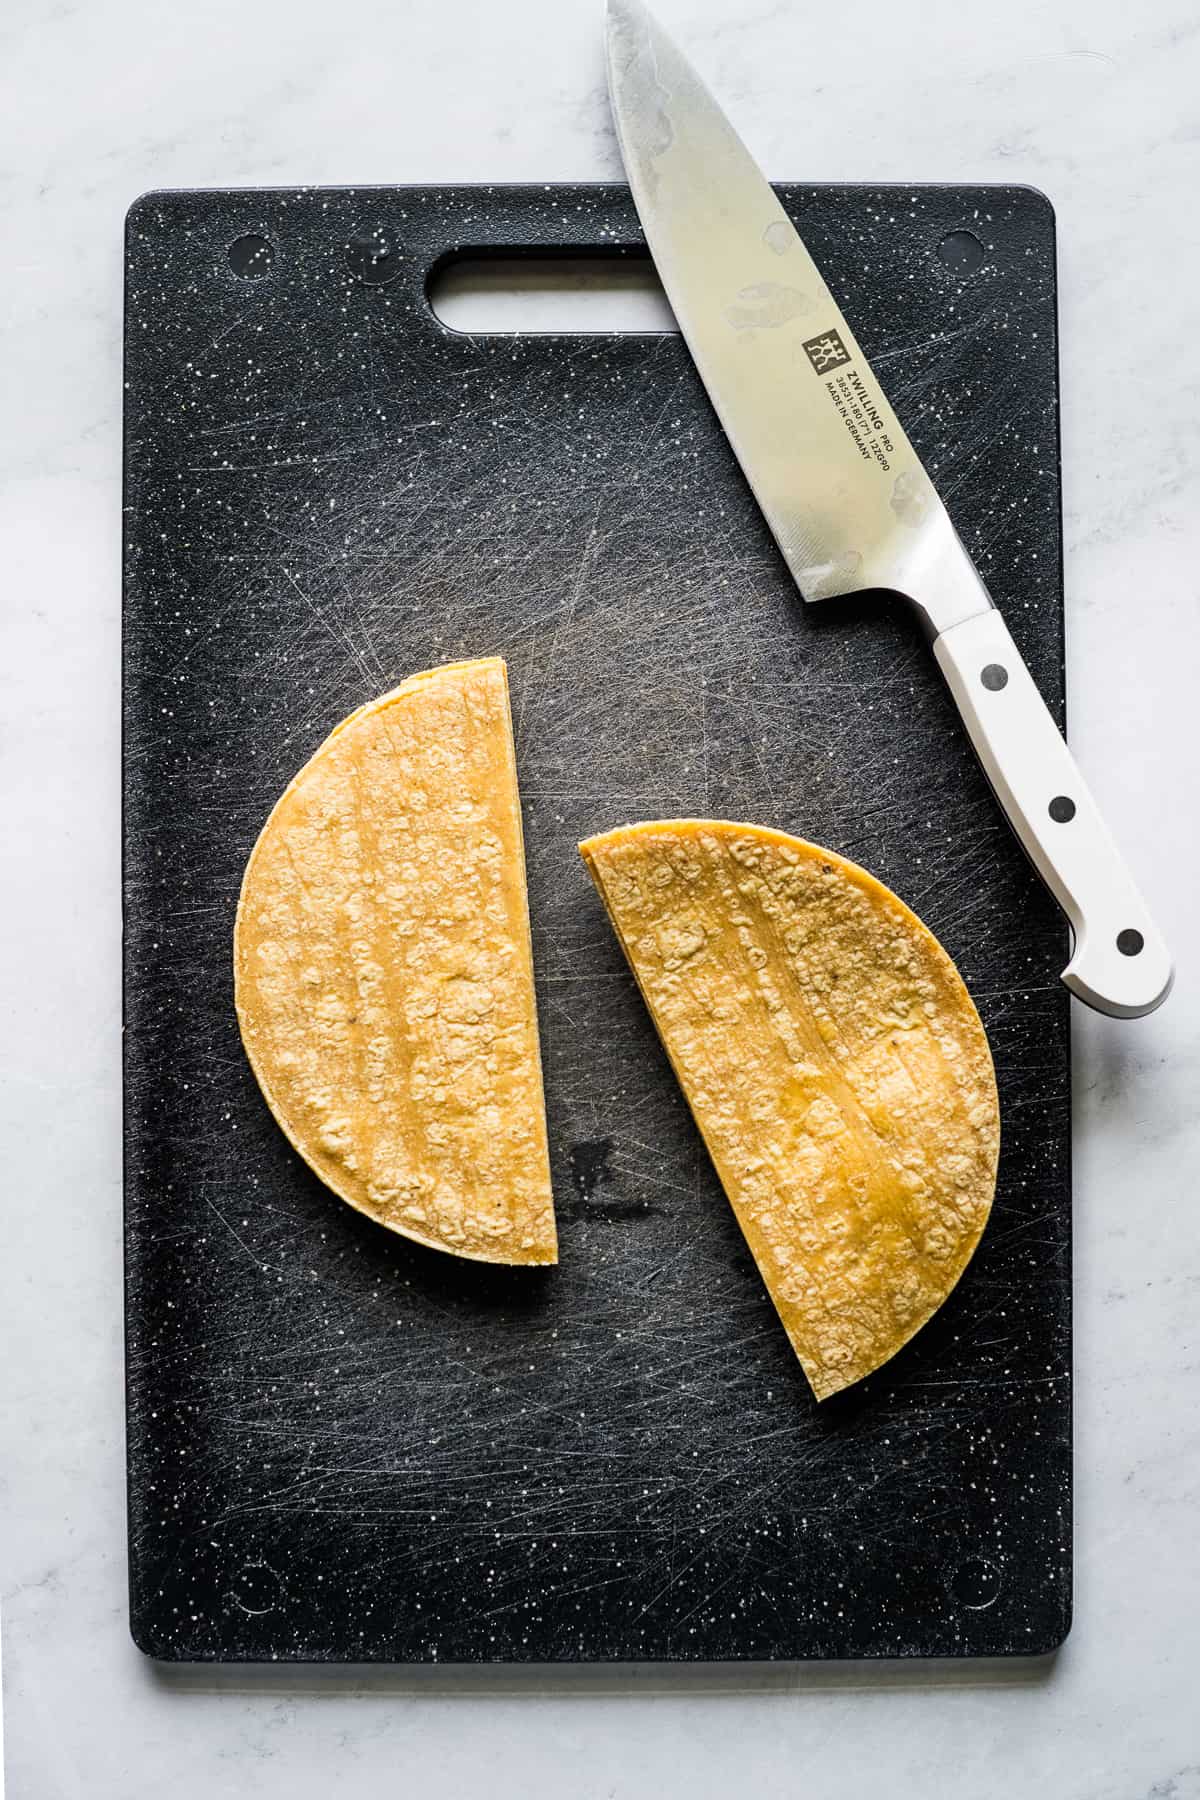 Corn tortillas cut in half down the middle.